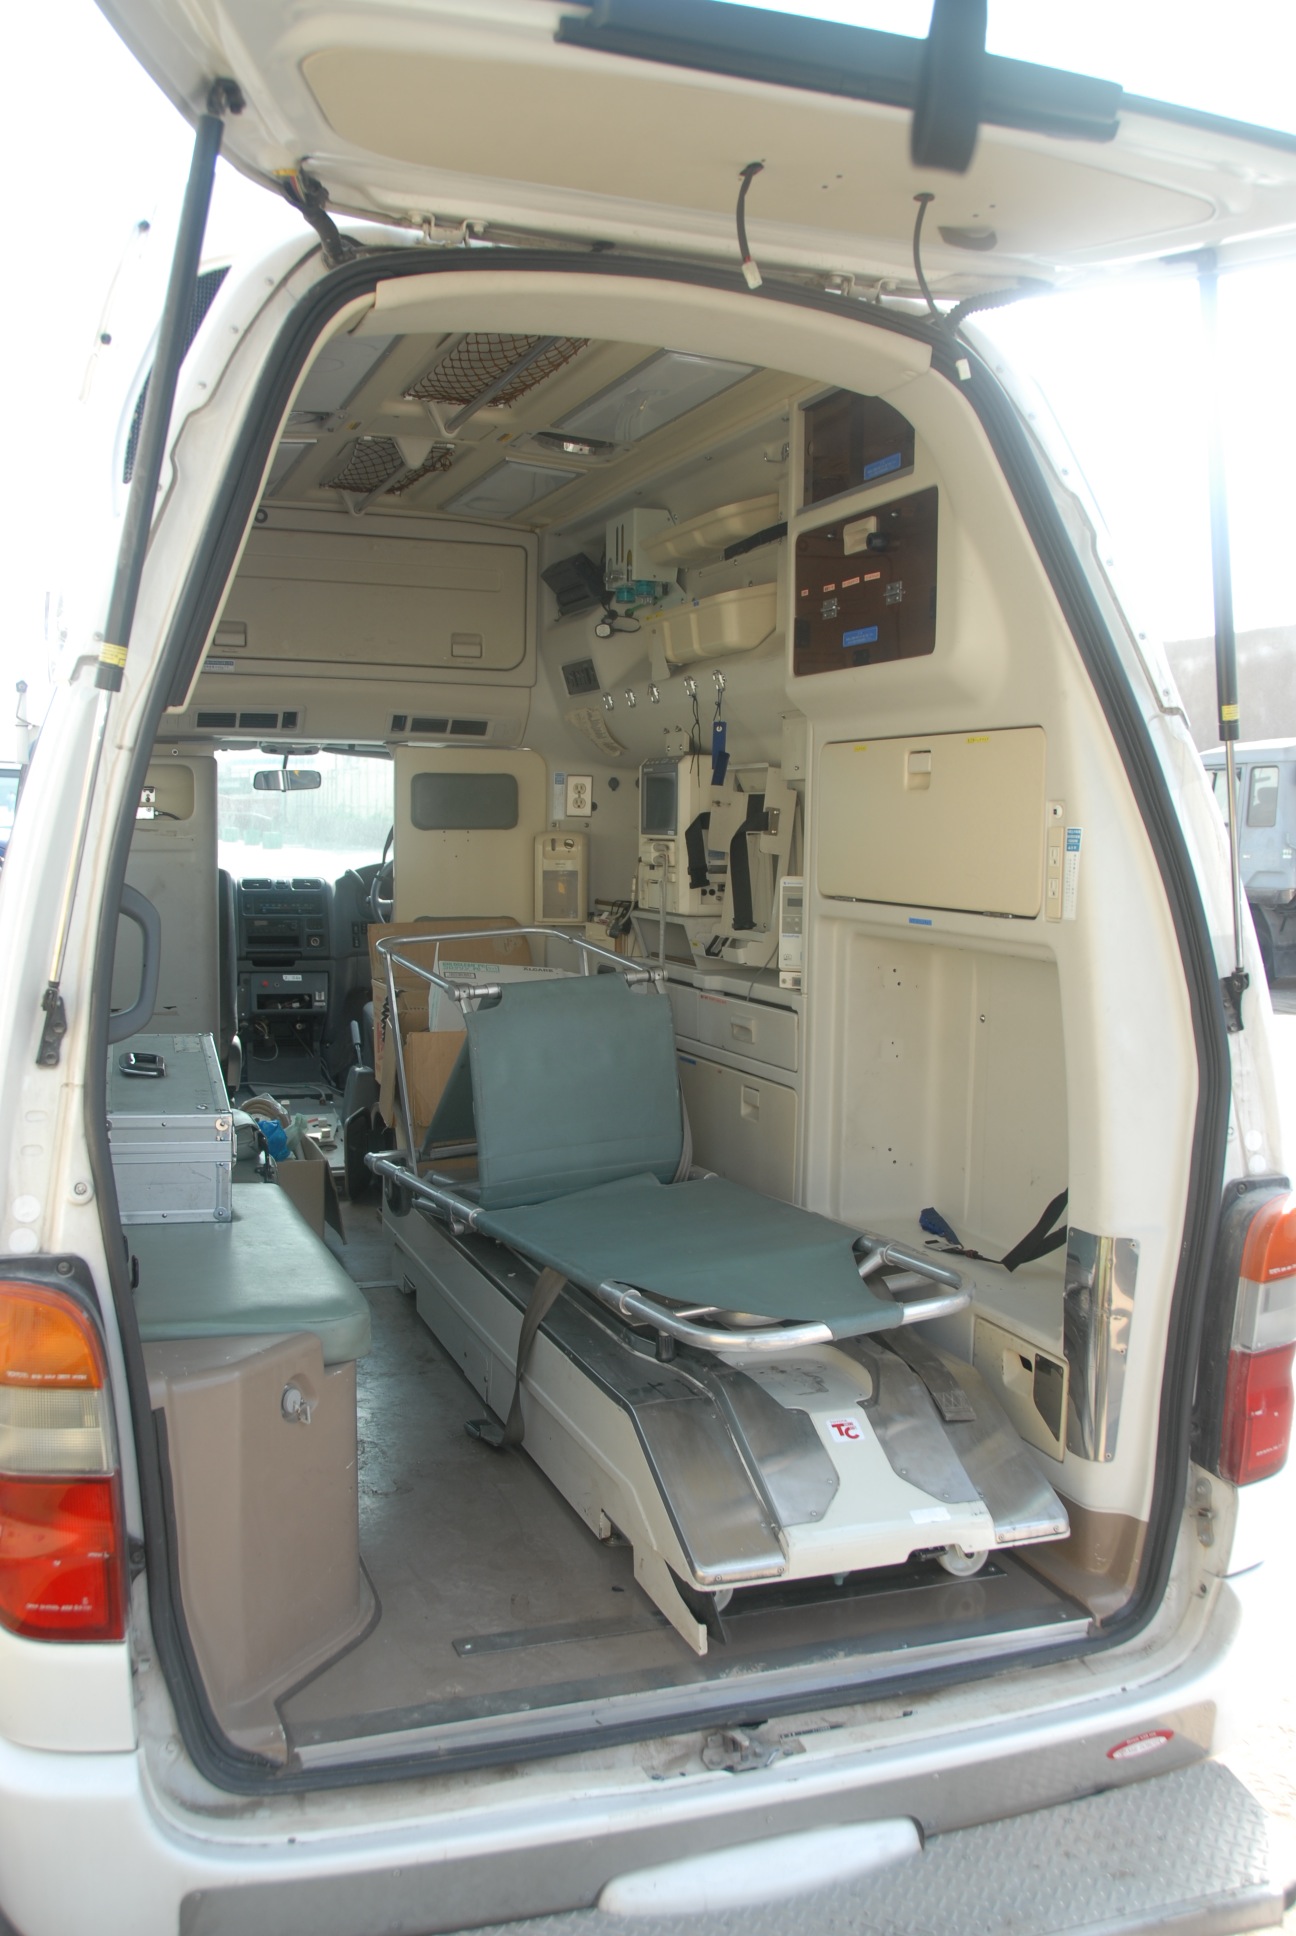 Toyota Ambulance Inside.JPG